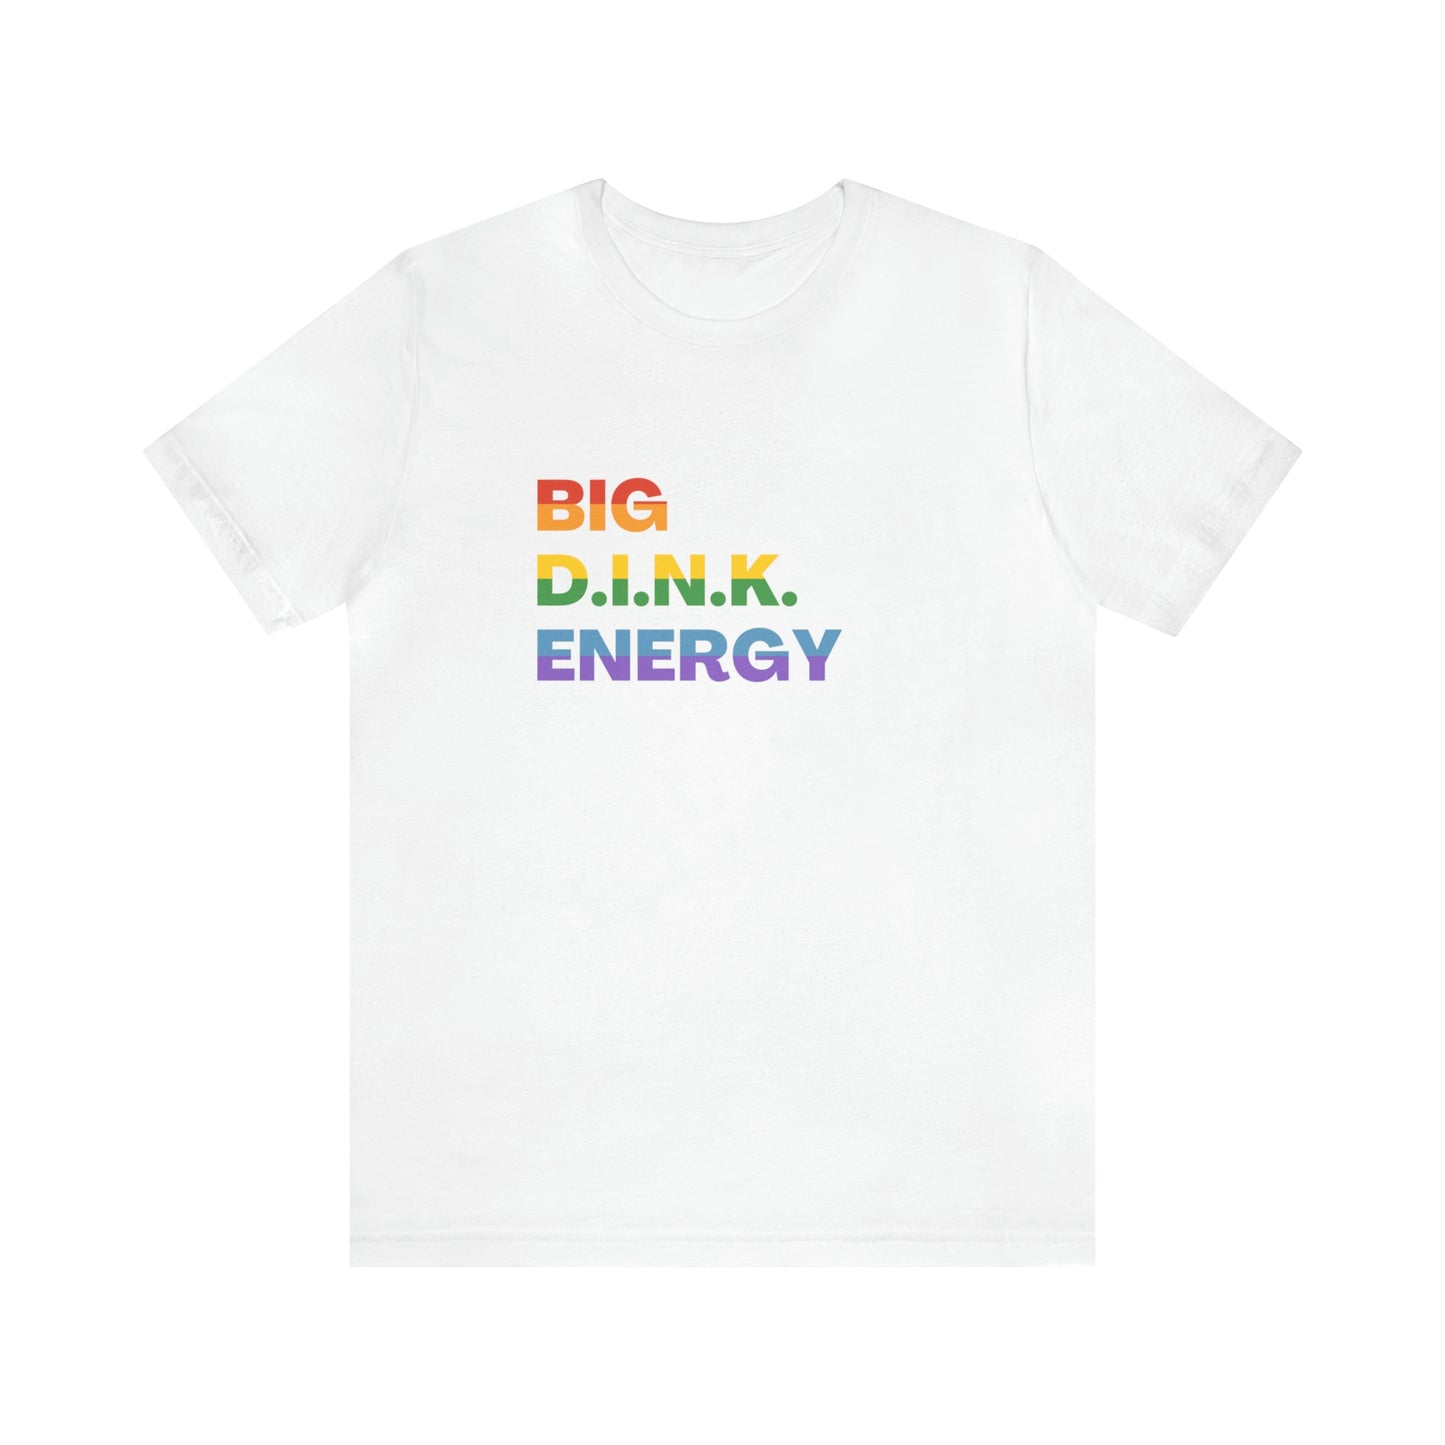 Big D.I.N.K. Energy Rainbow Tee